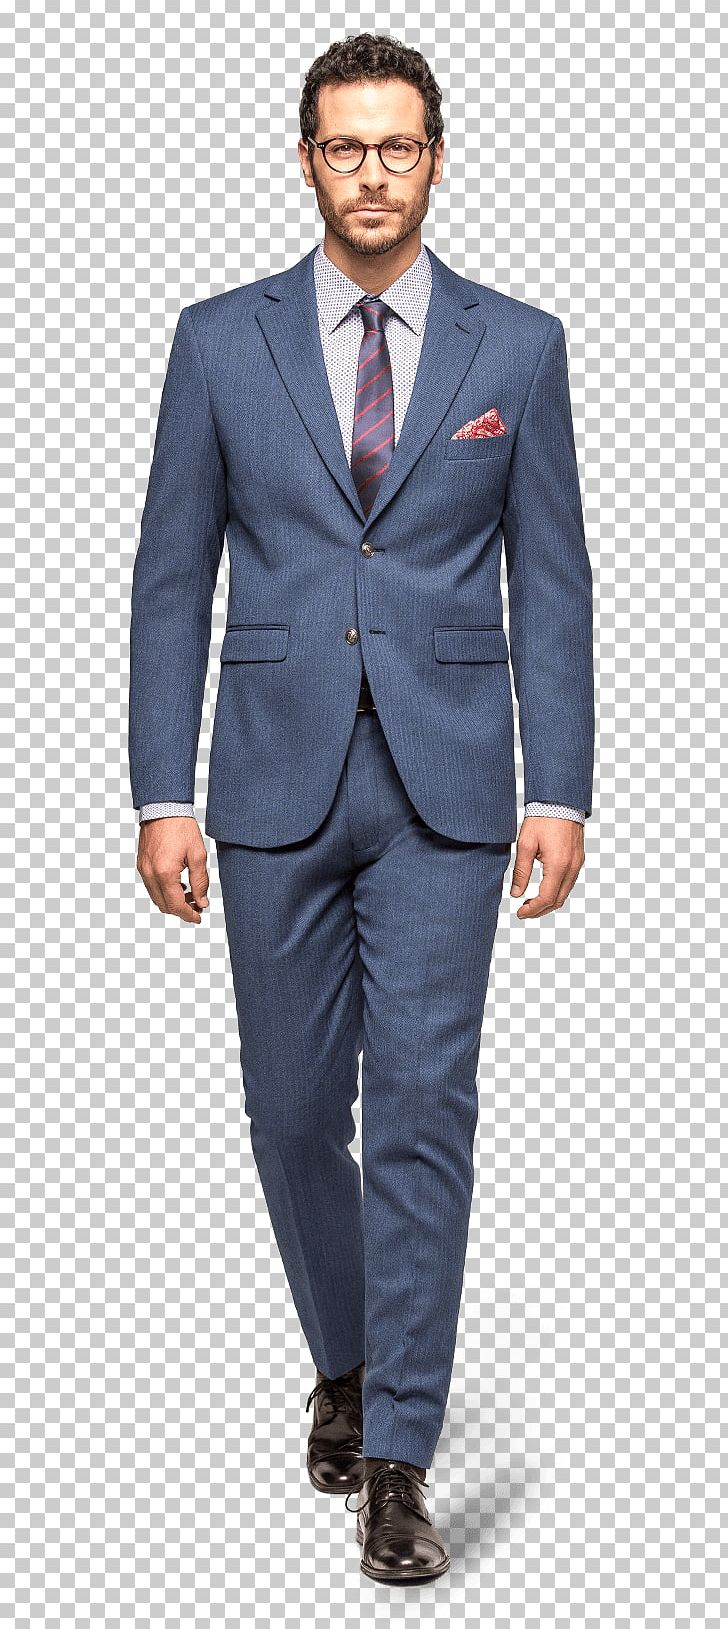 Suit Blazer Sport Coat Button Clothing PNG, Clipart, Blazer, Blue, Business, Businessperson, Button Free PNG Download